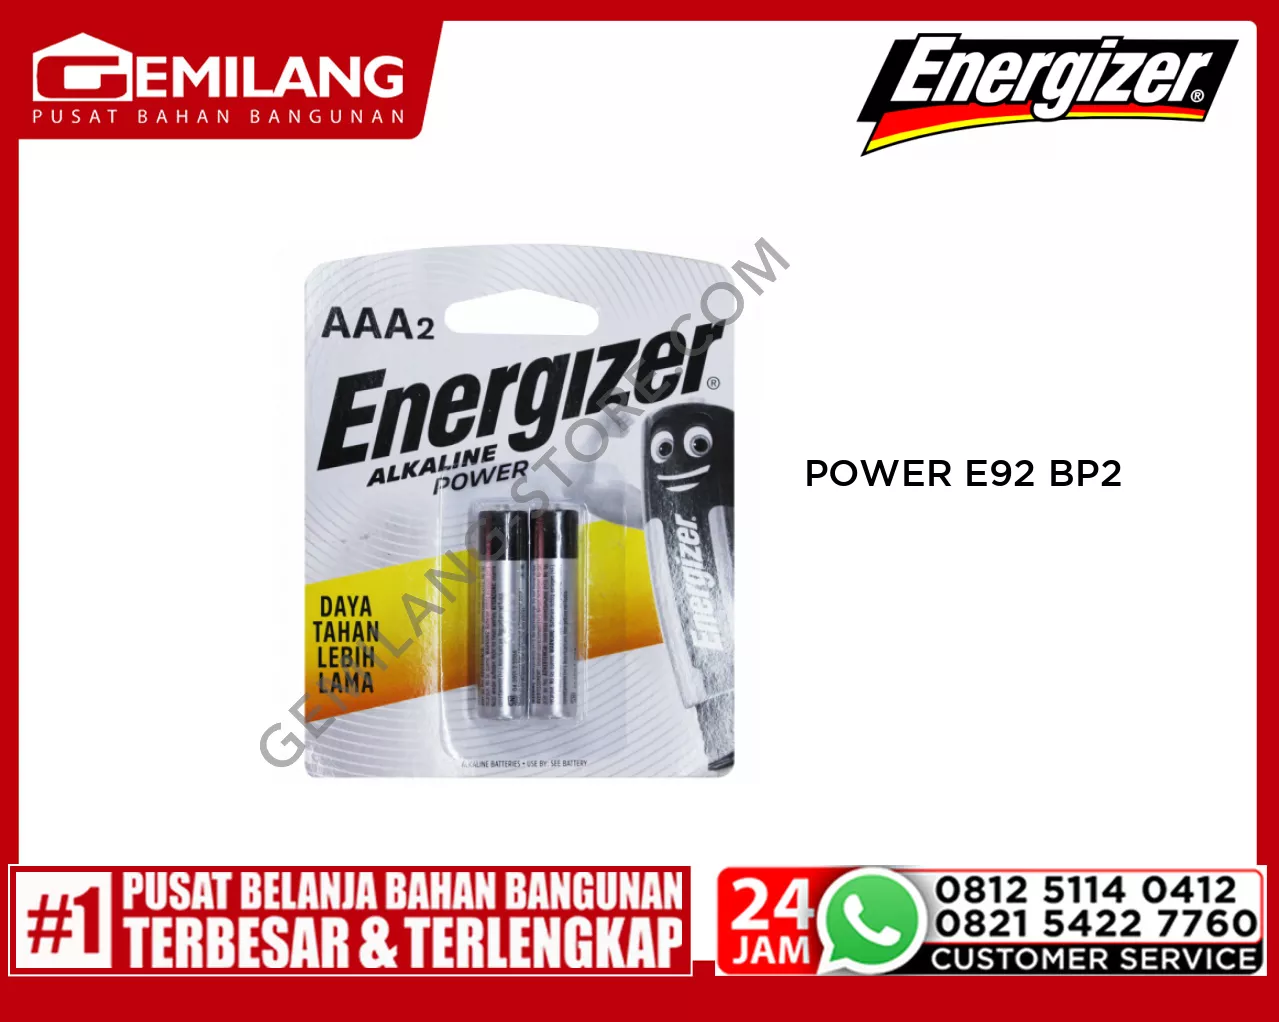 ENERGIZER POWER E92 BP2